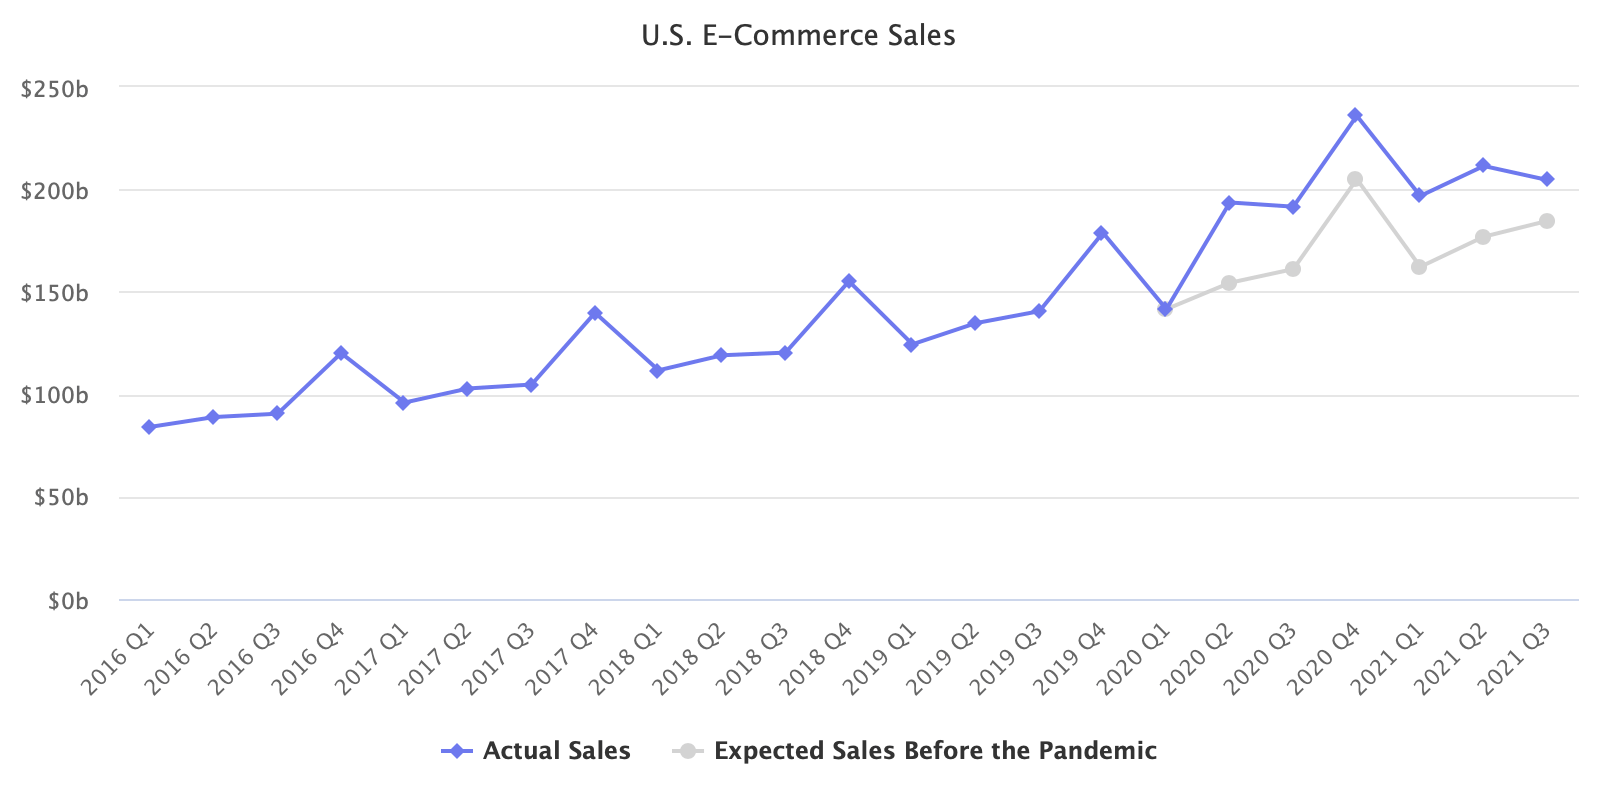 U.S. E-Commerce Sales